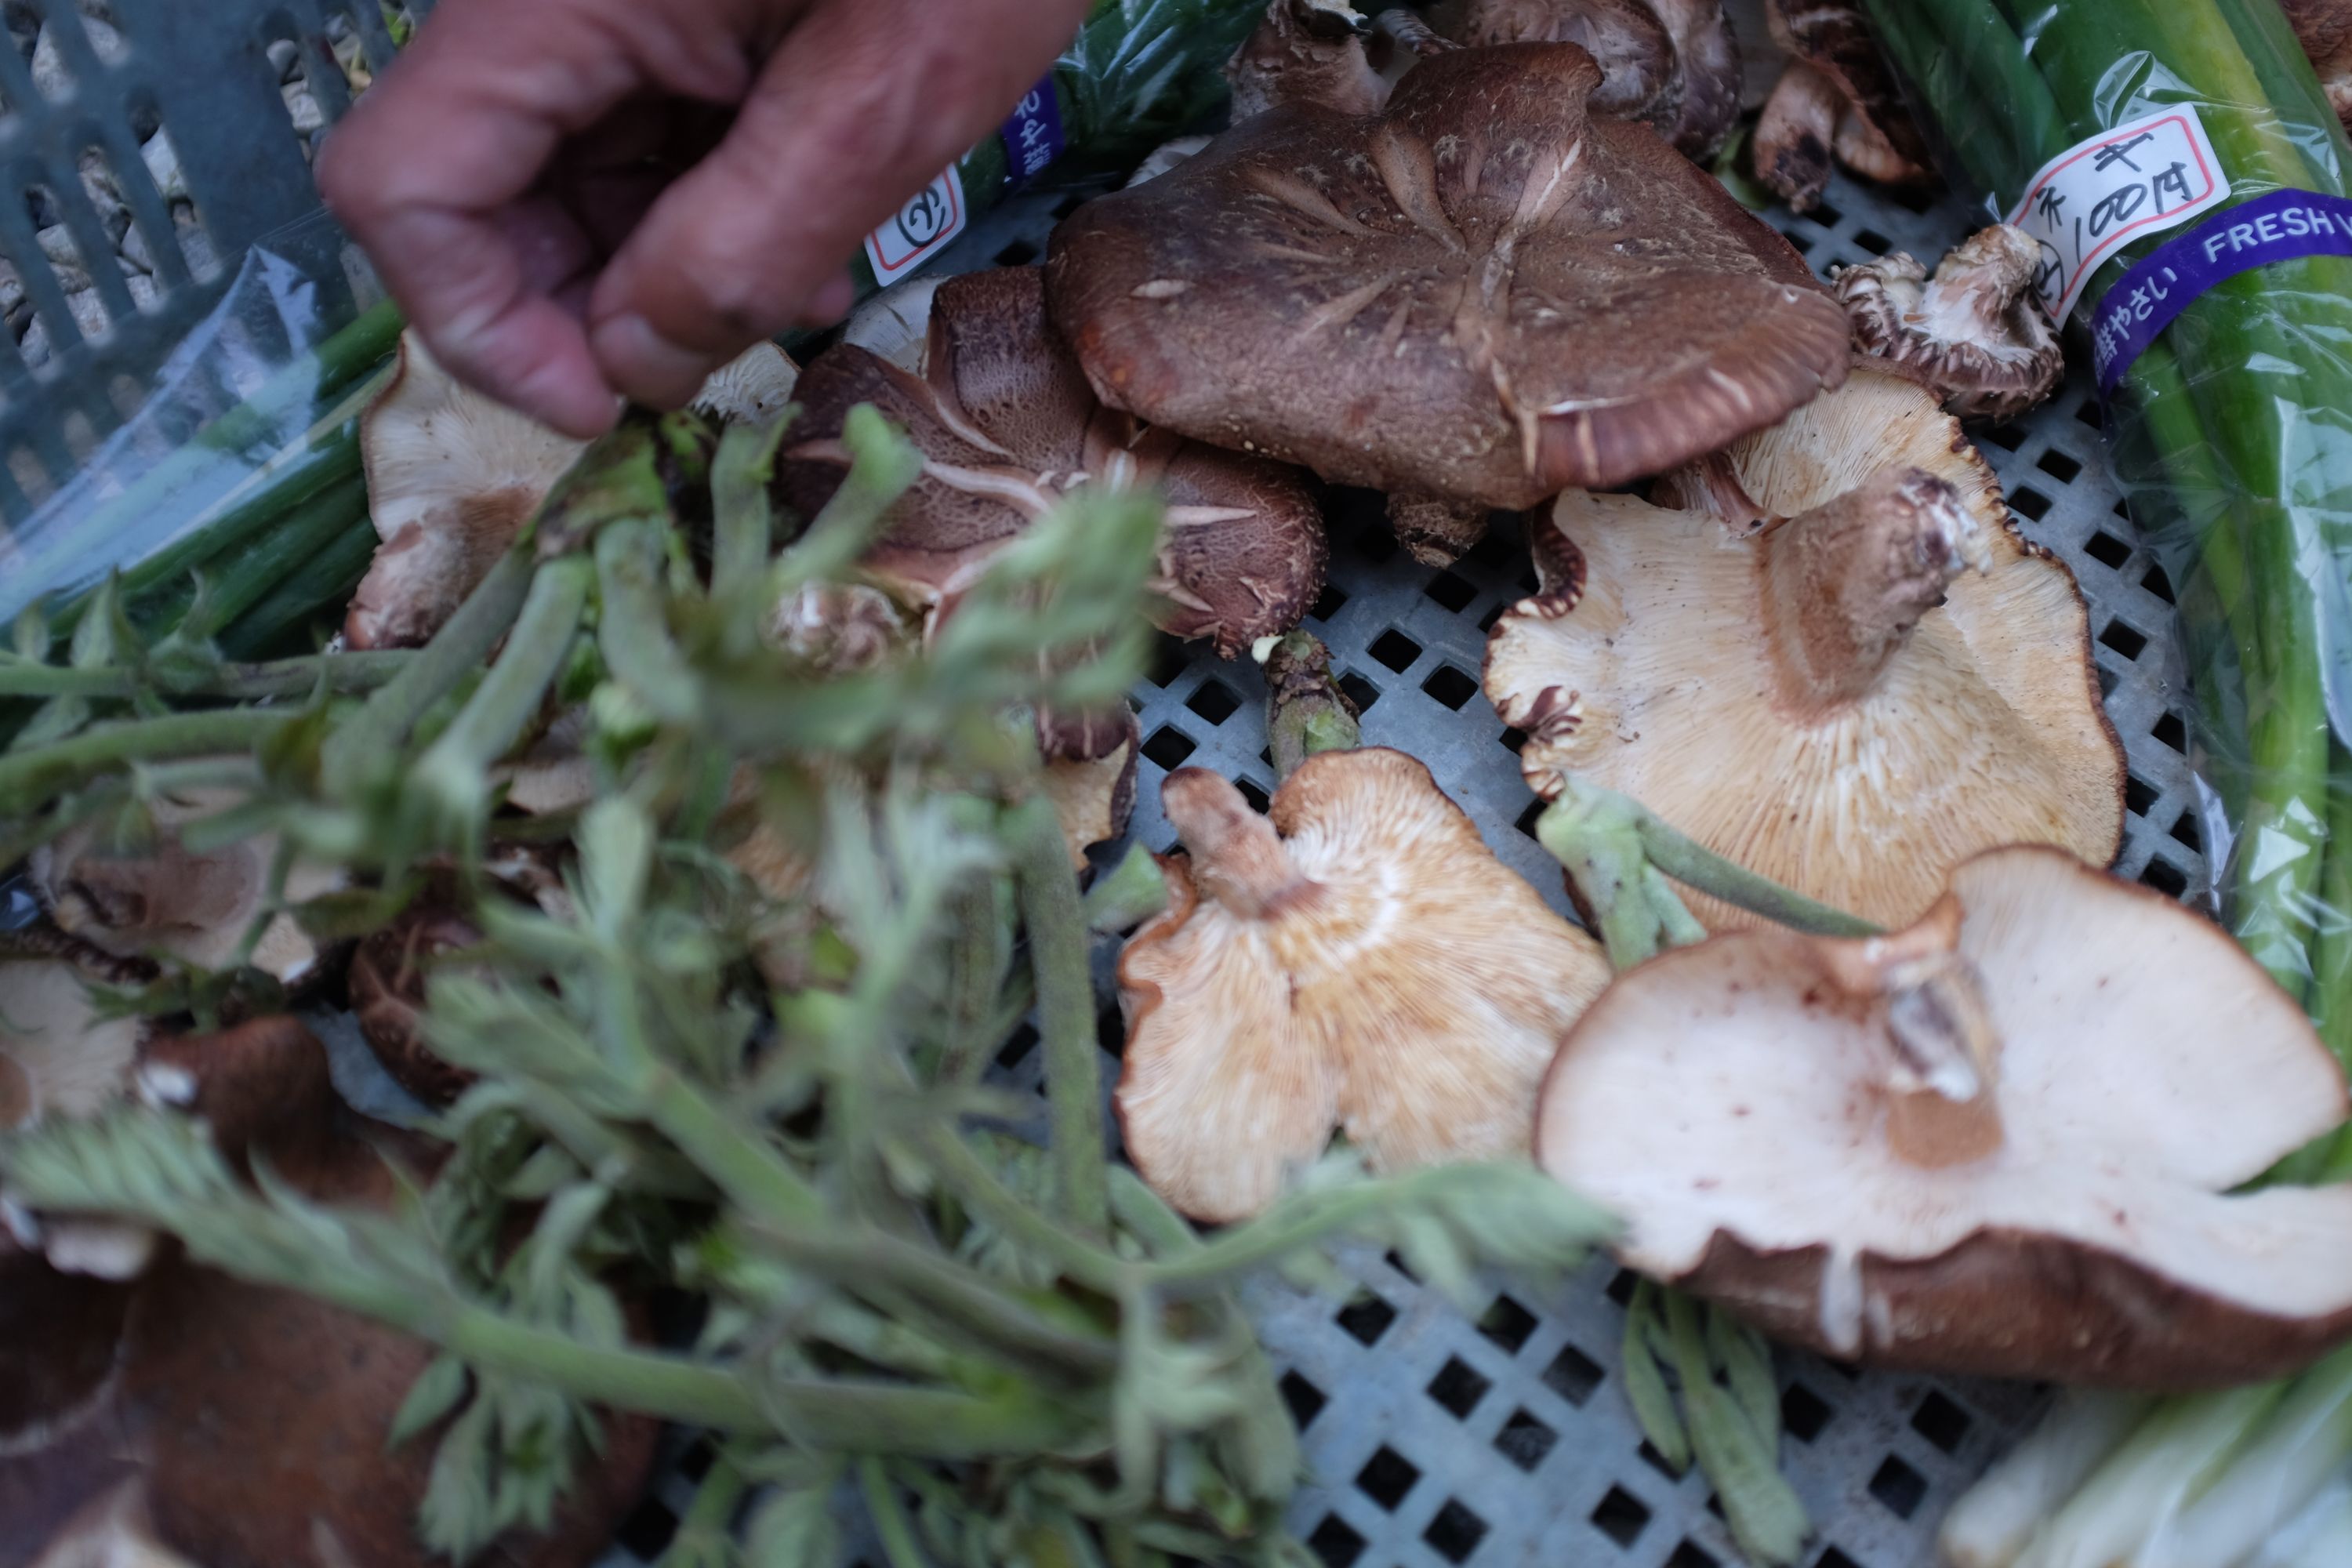 A basket of mountain herbs and wild shiitake mushrooms.